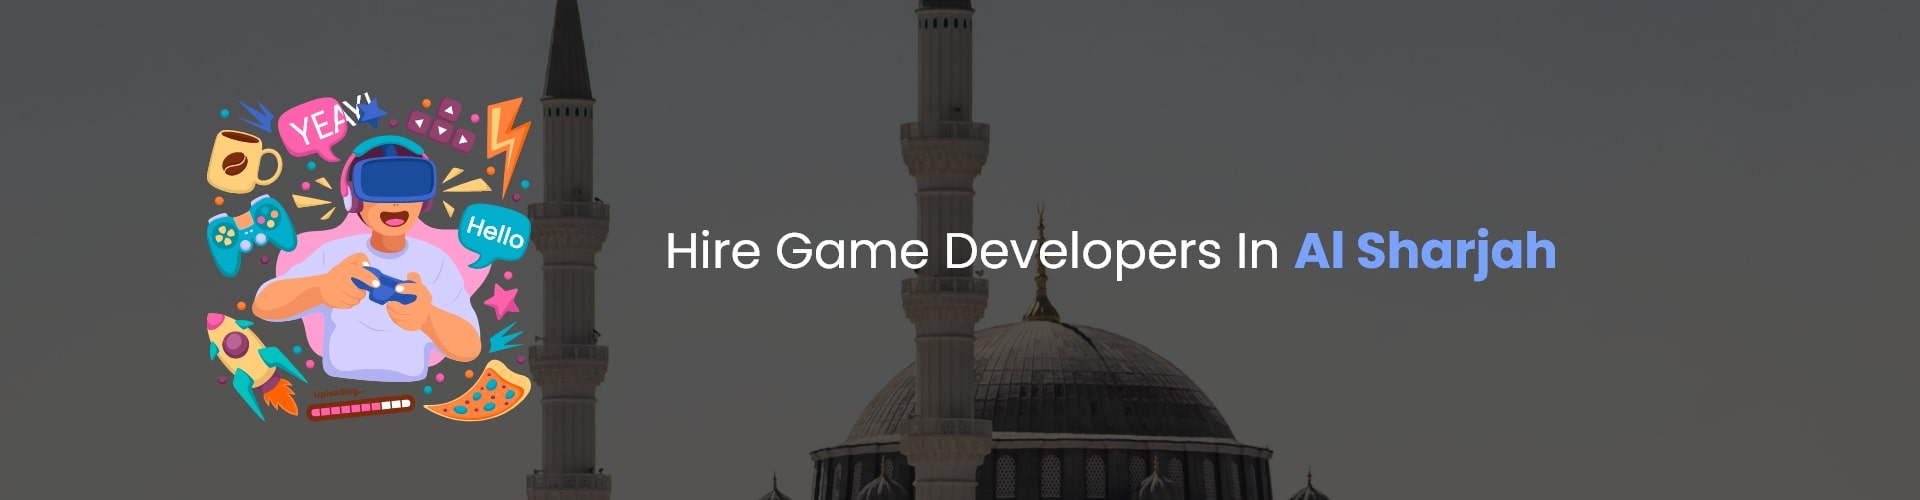 hire game developers in al sharjah